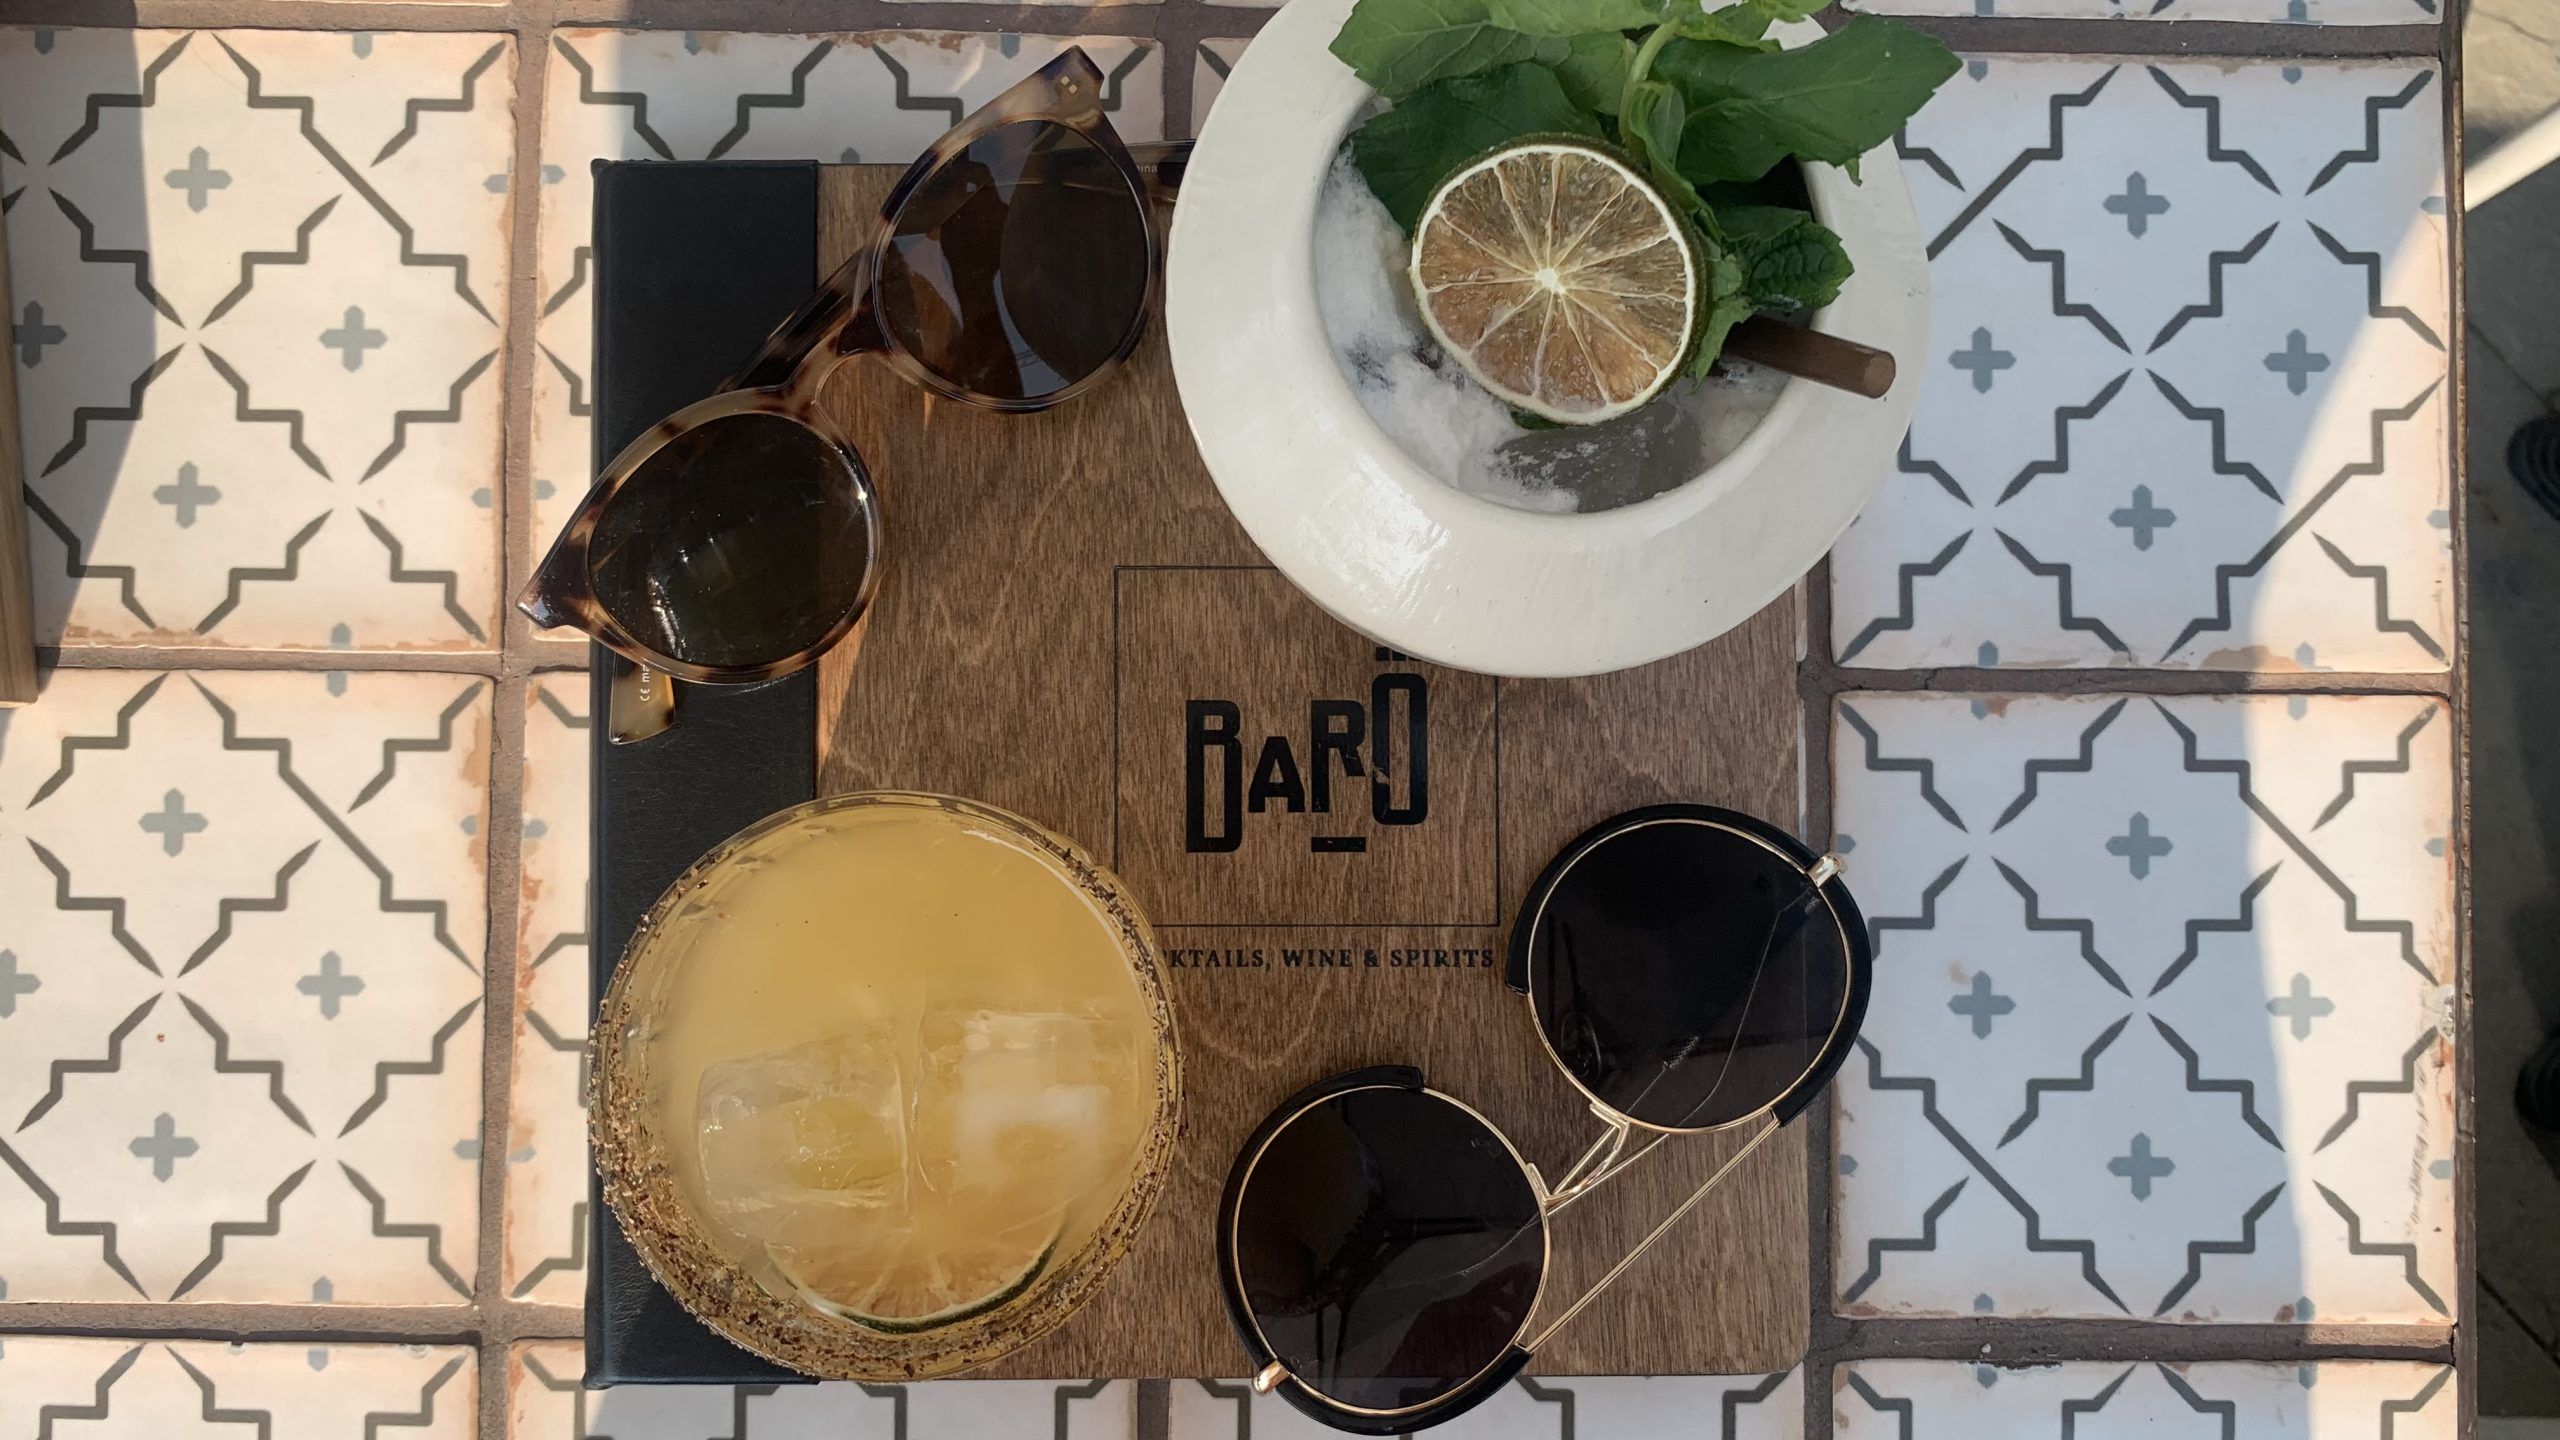 Baro menu and cocktails